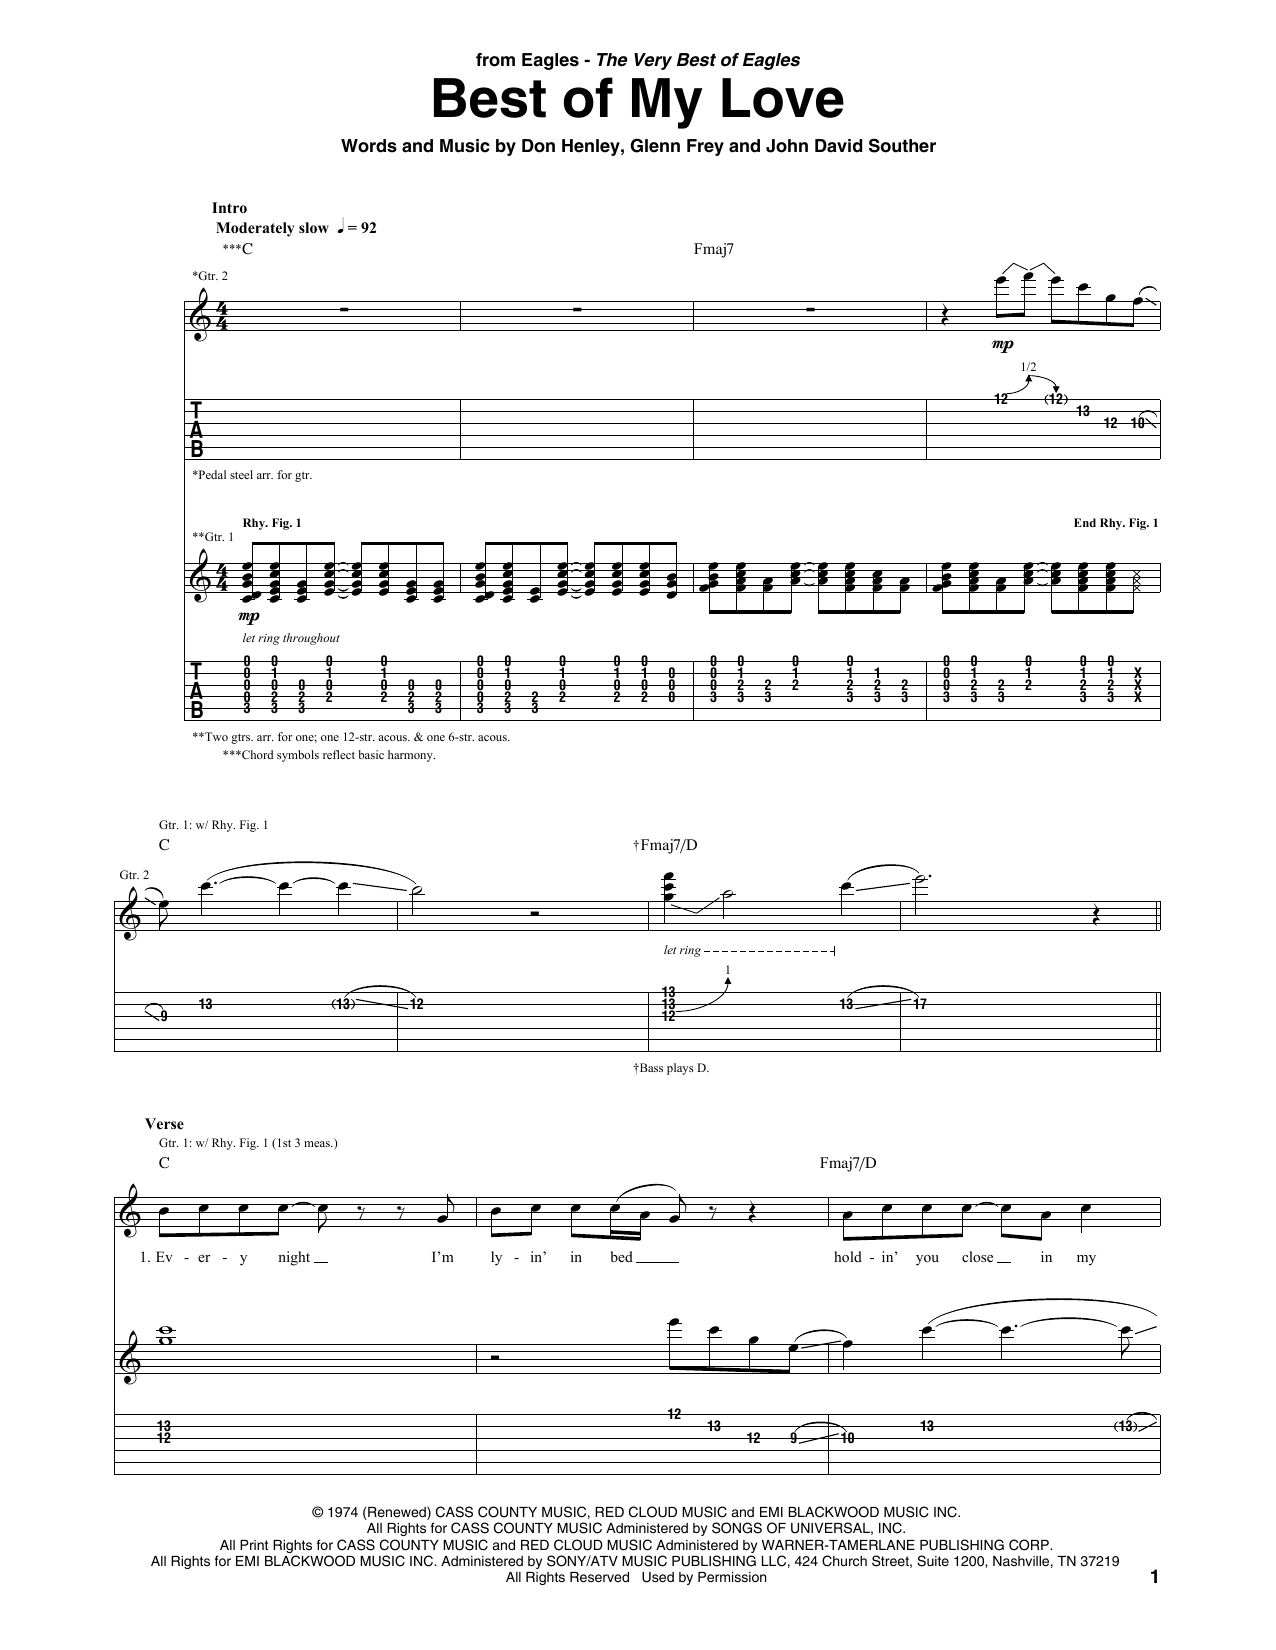 Eagles Best Of My Love Sheet Music Notes & Chords for Ukulele - Download or Print PDF